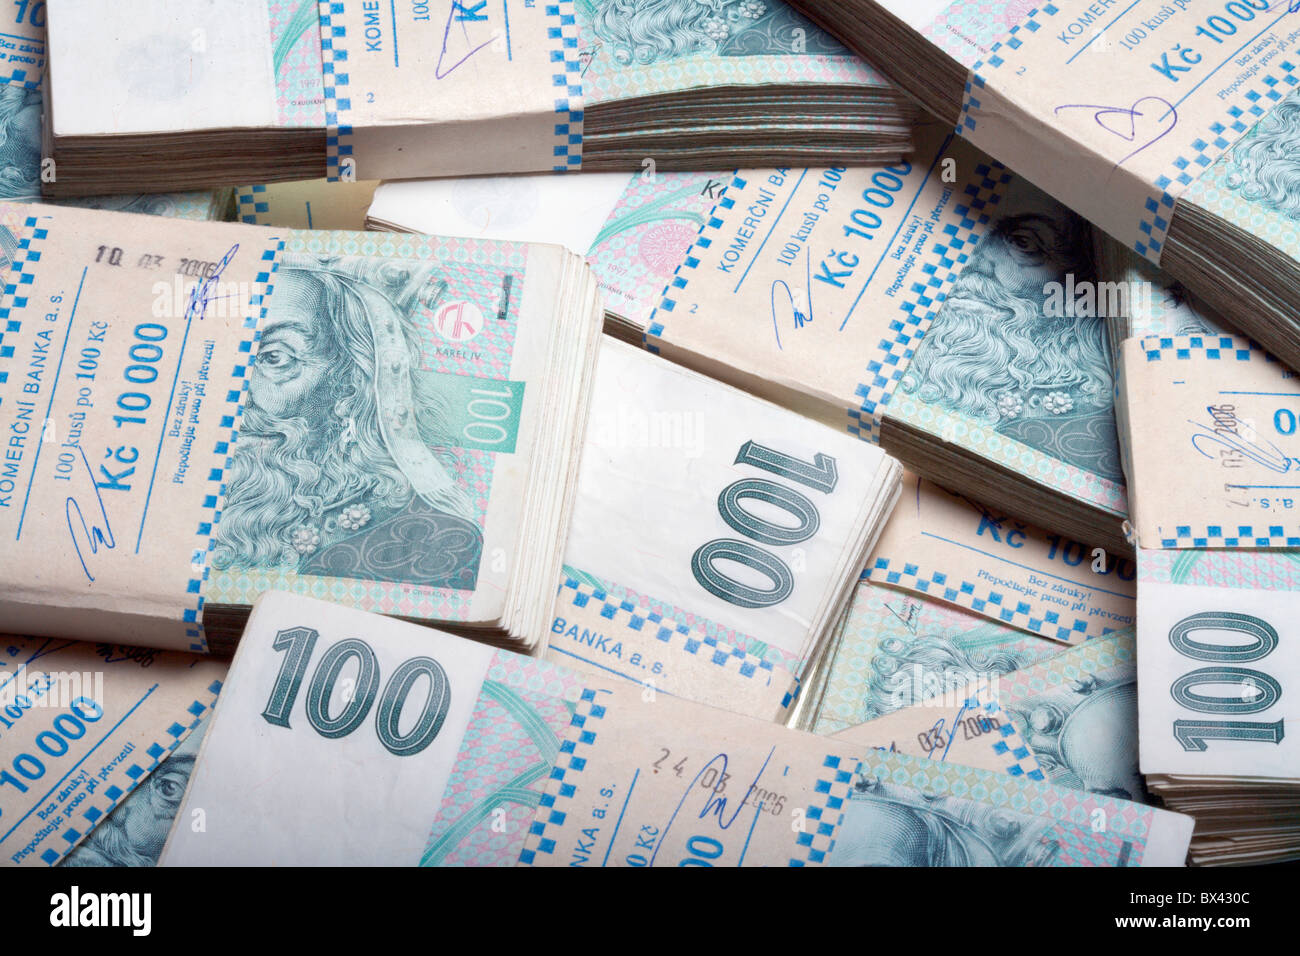 Czechia Currency Finance 100 Koruna bank notes bills money Stock Photo